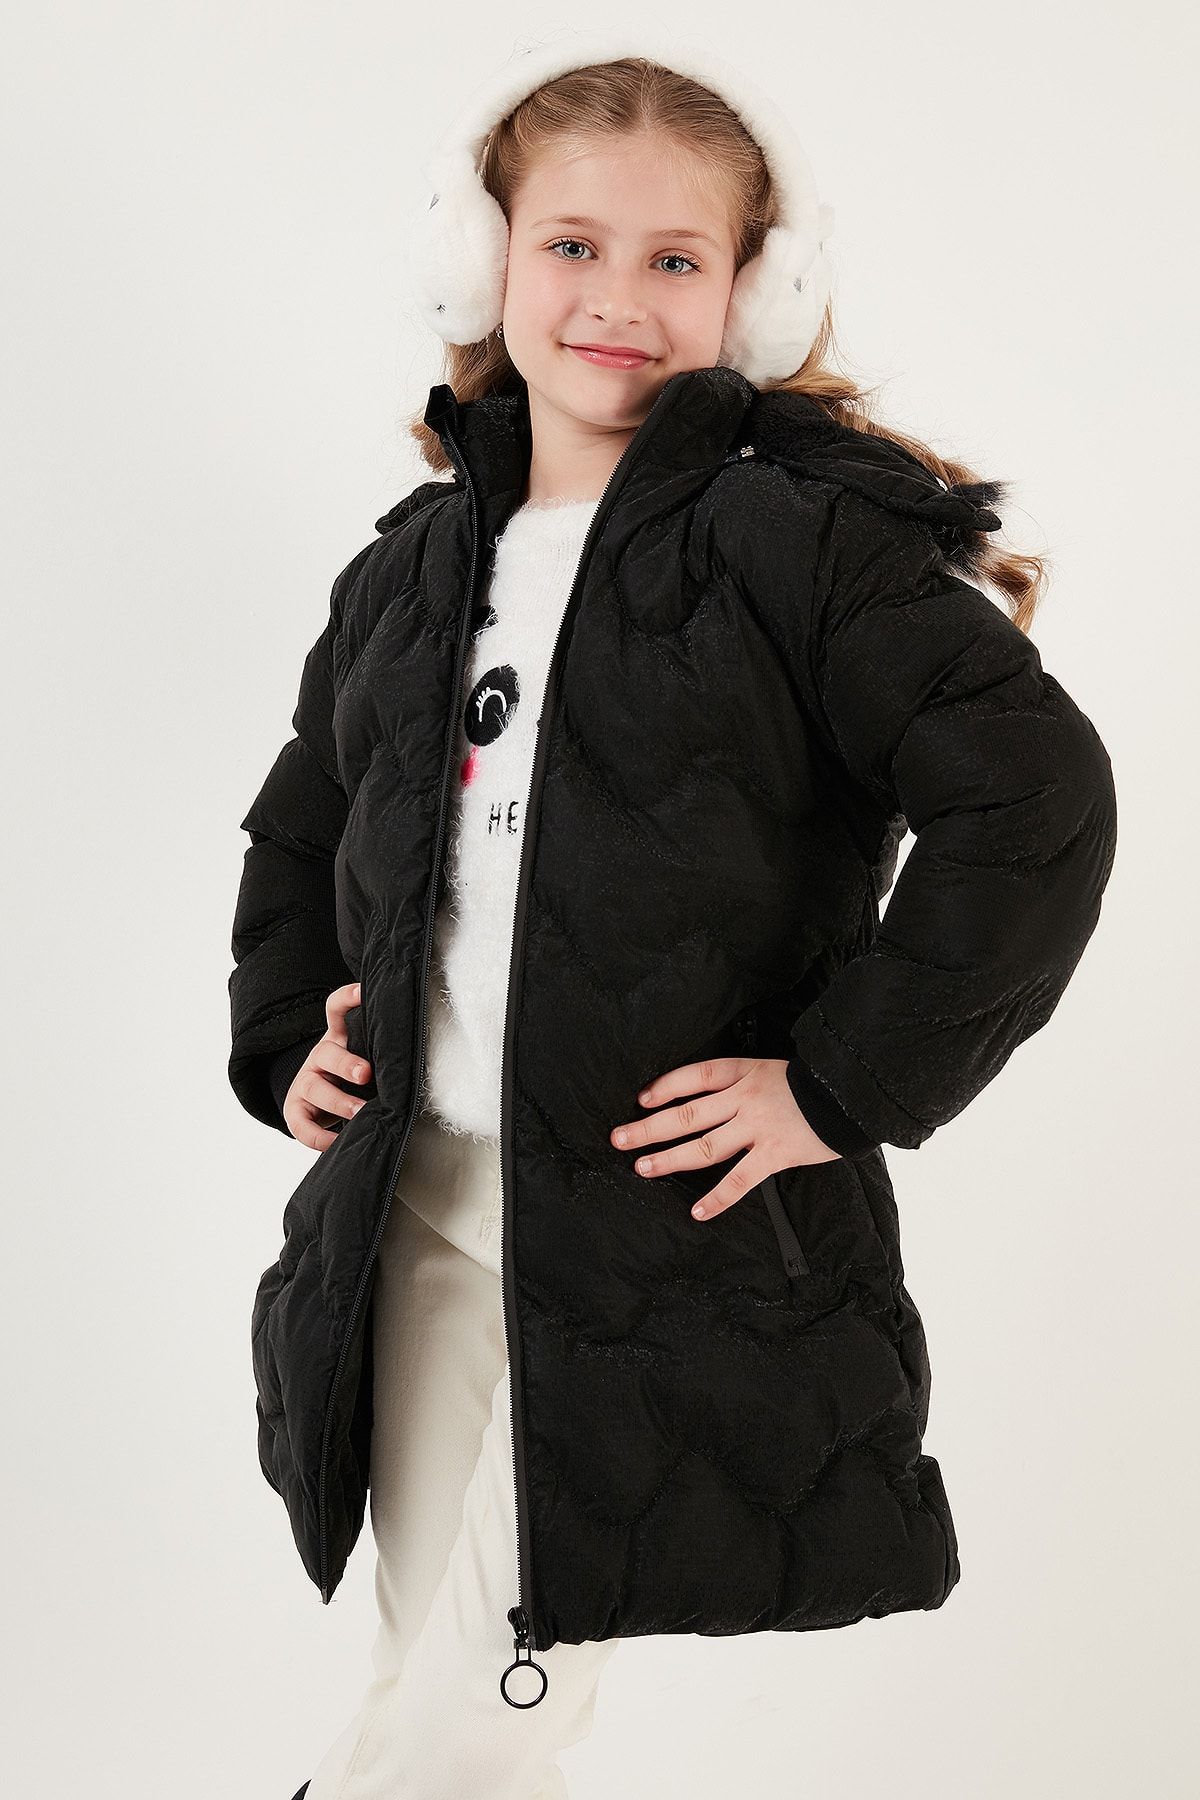 Lela کت دخترانه زمستانی با آستر یقه و کلاه قابل جابجایی